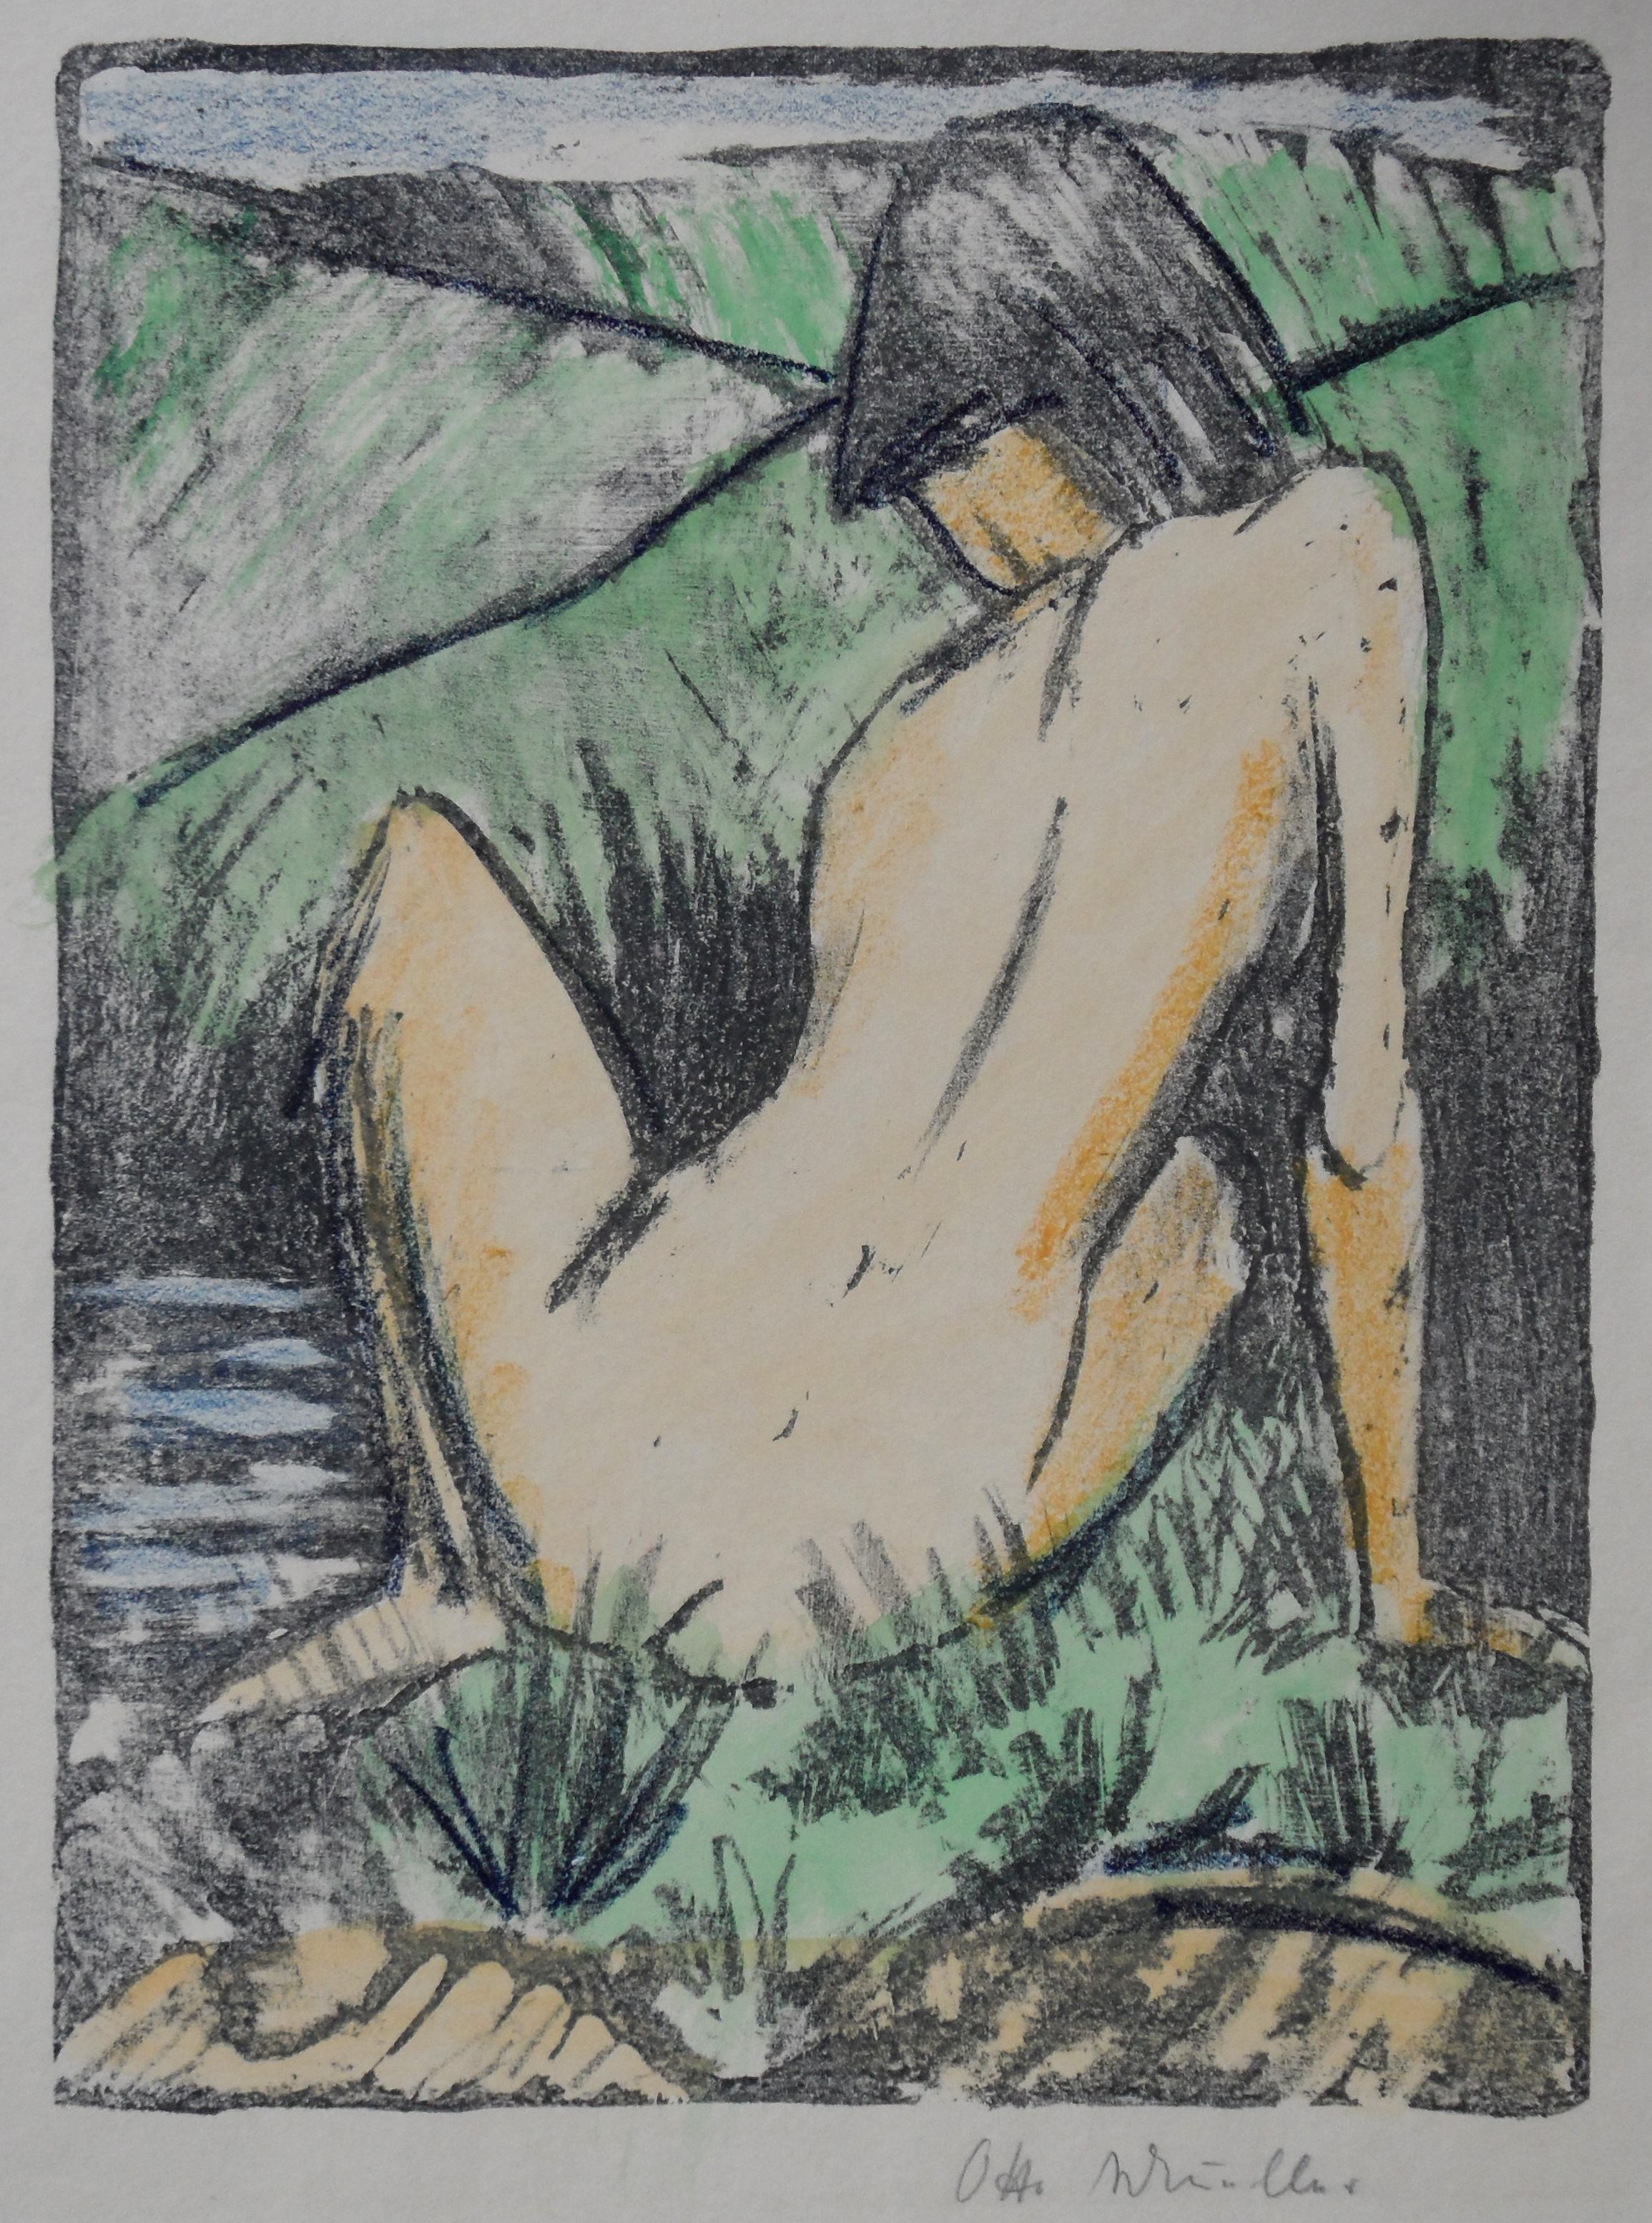 Otto Mueller, "Olympia", 1924